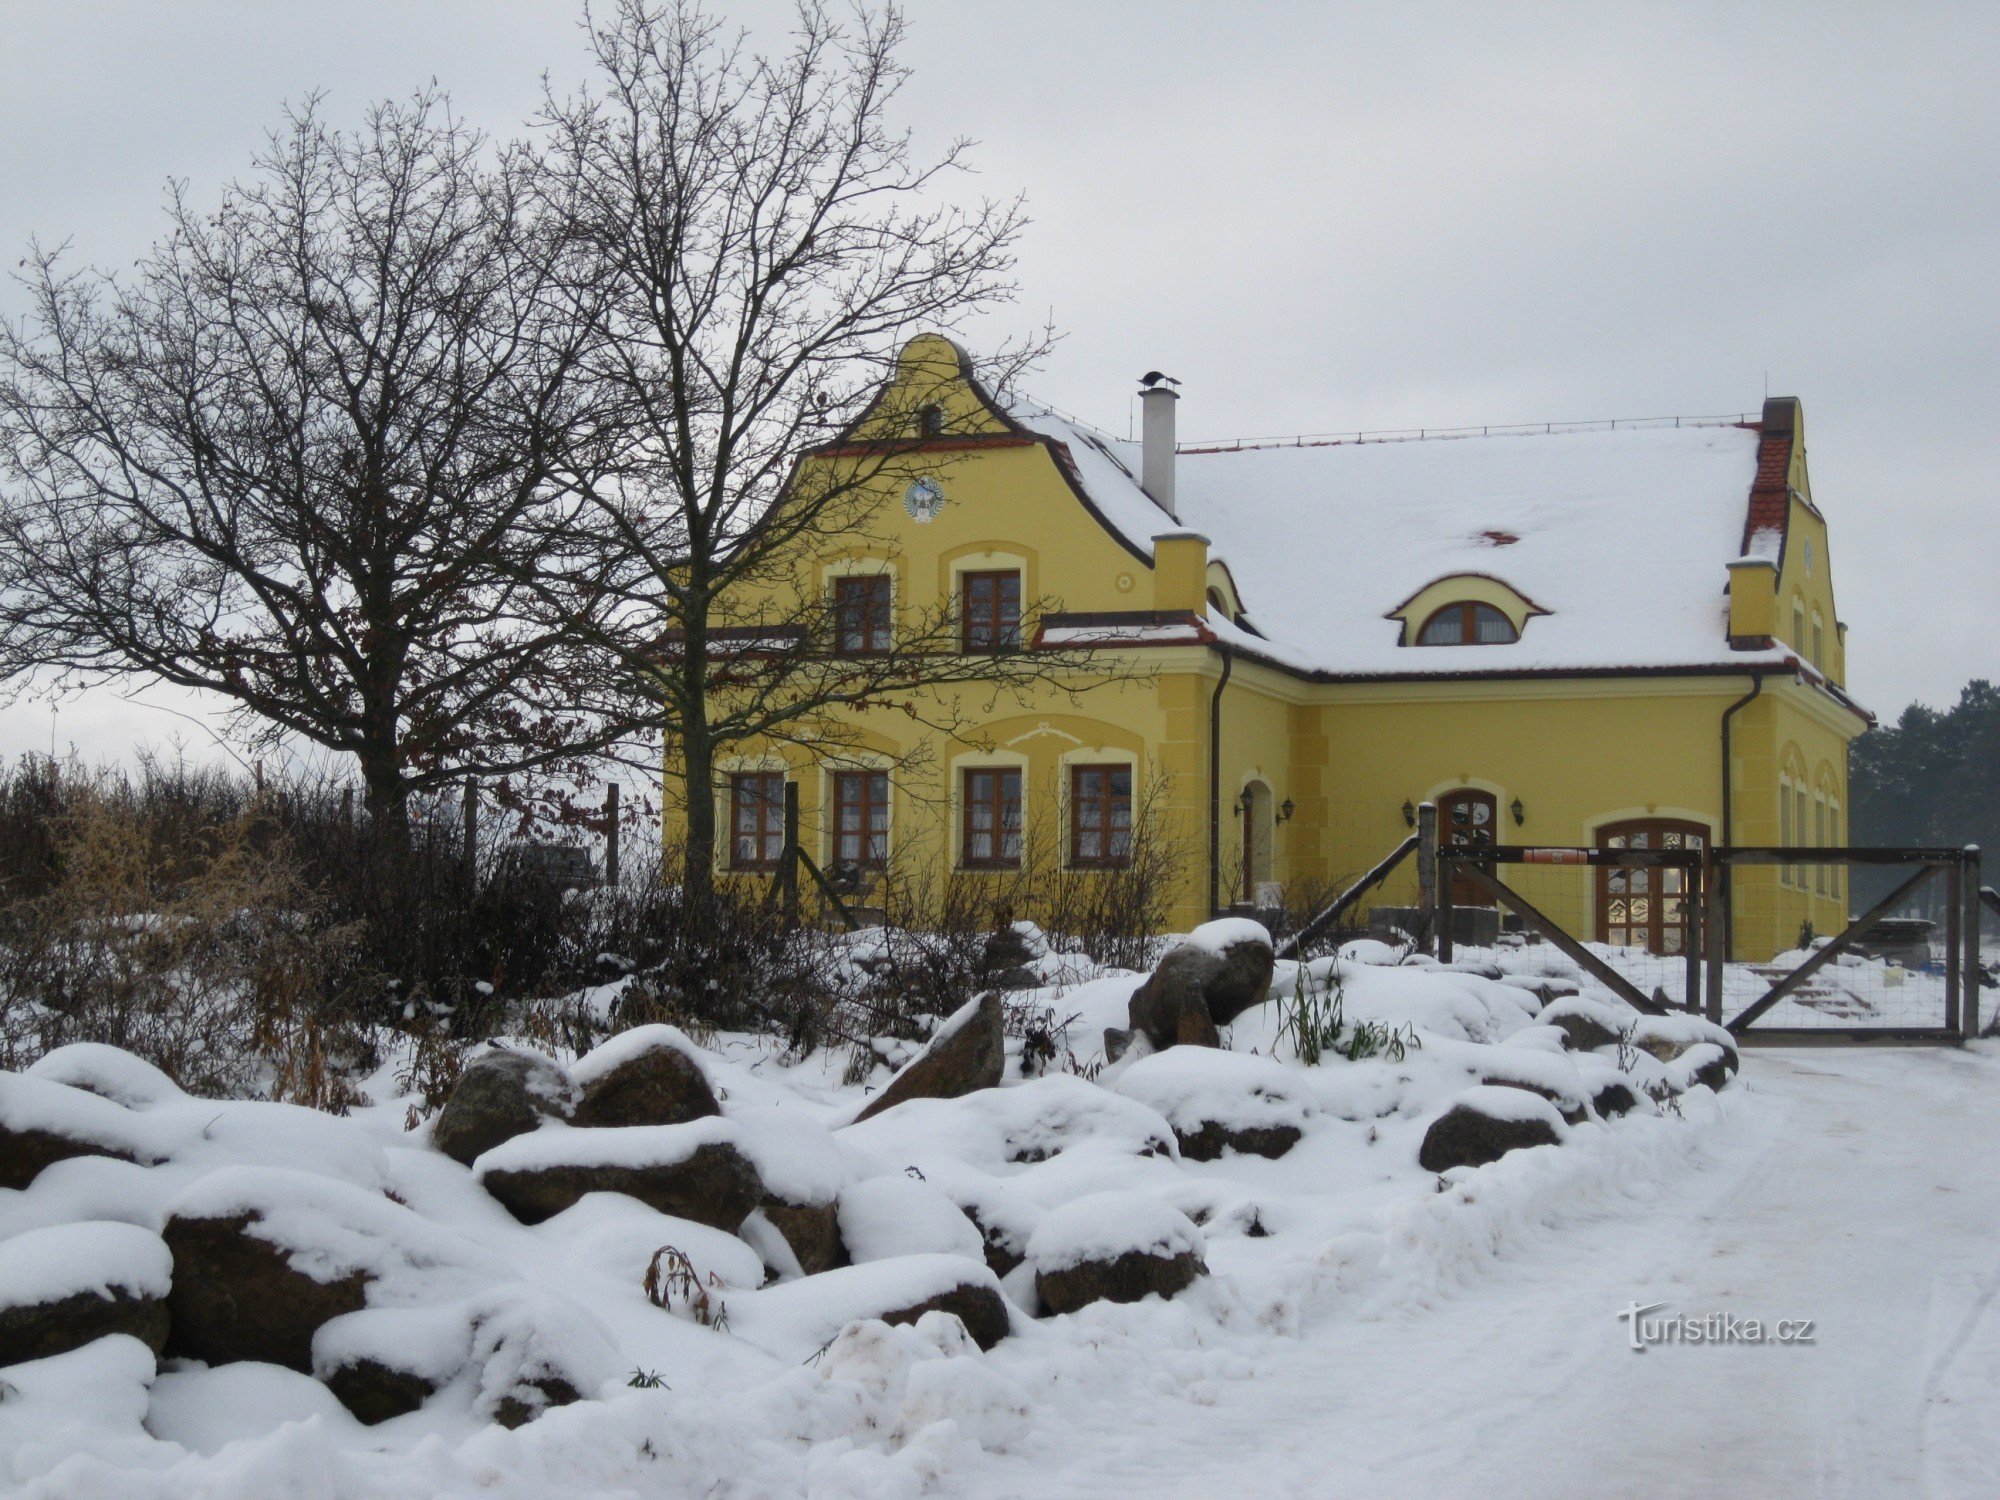 Family house in front of Skaličany